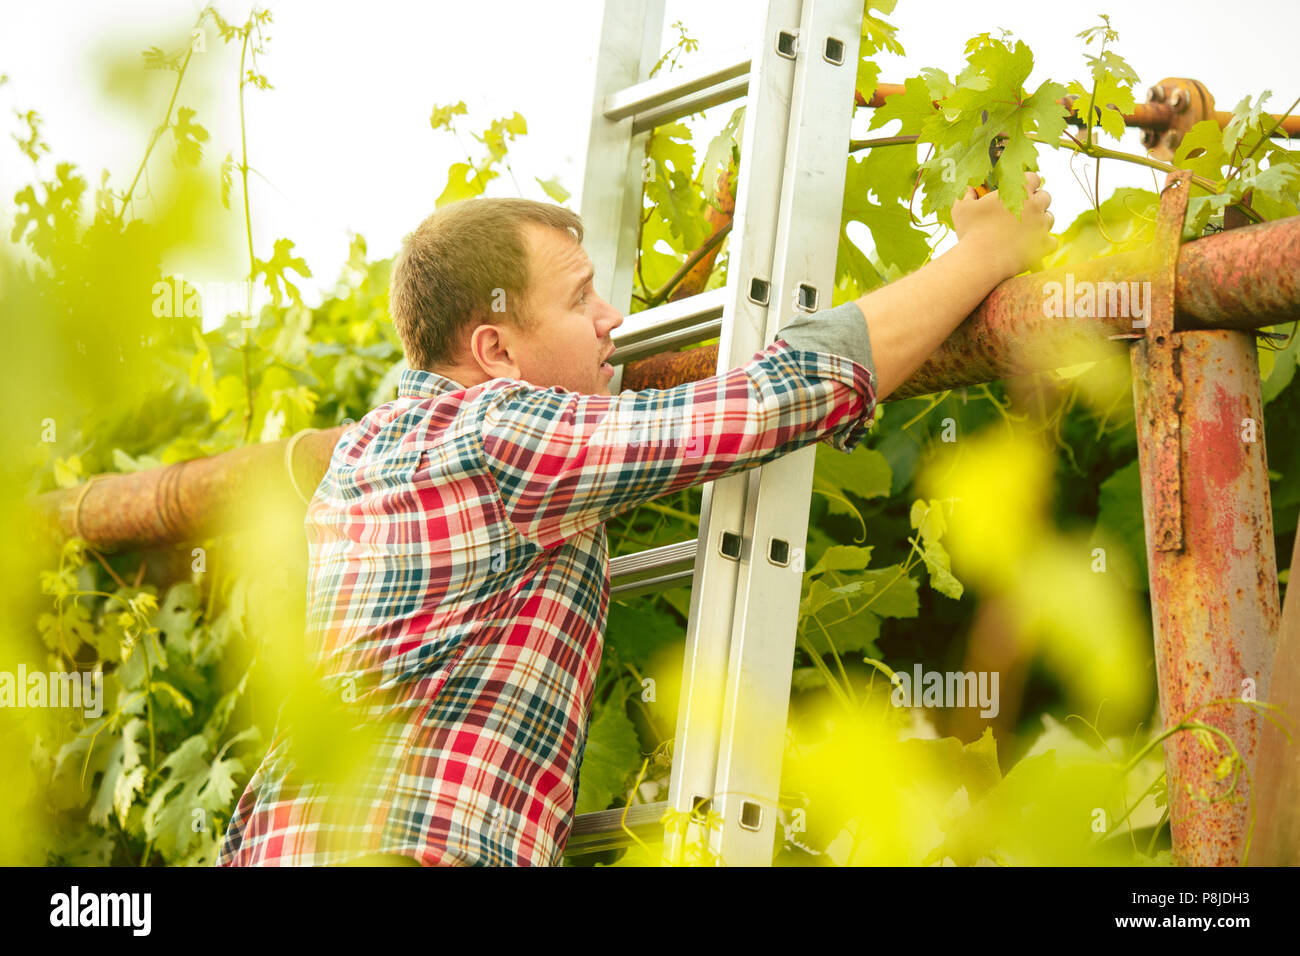 Mant prune grape brunch, work on a family farm Stock Photo